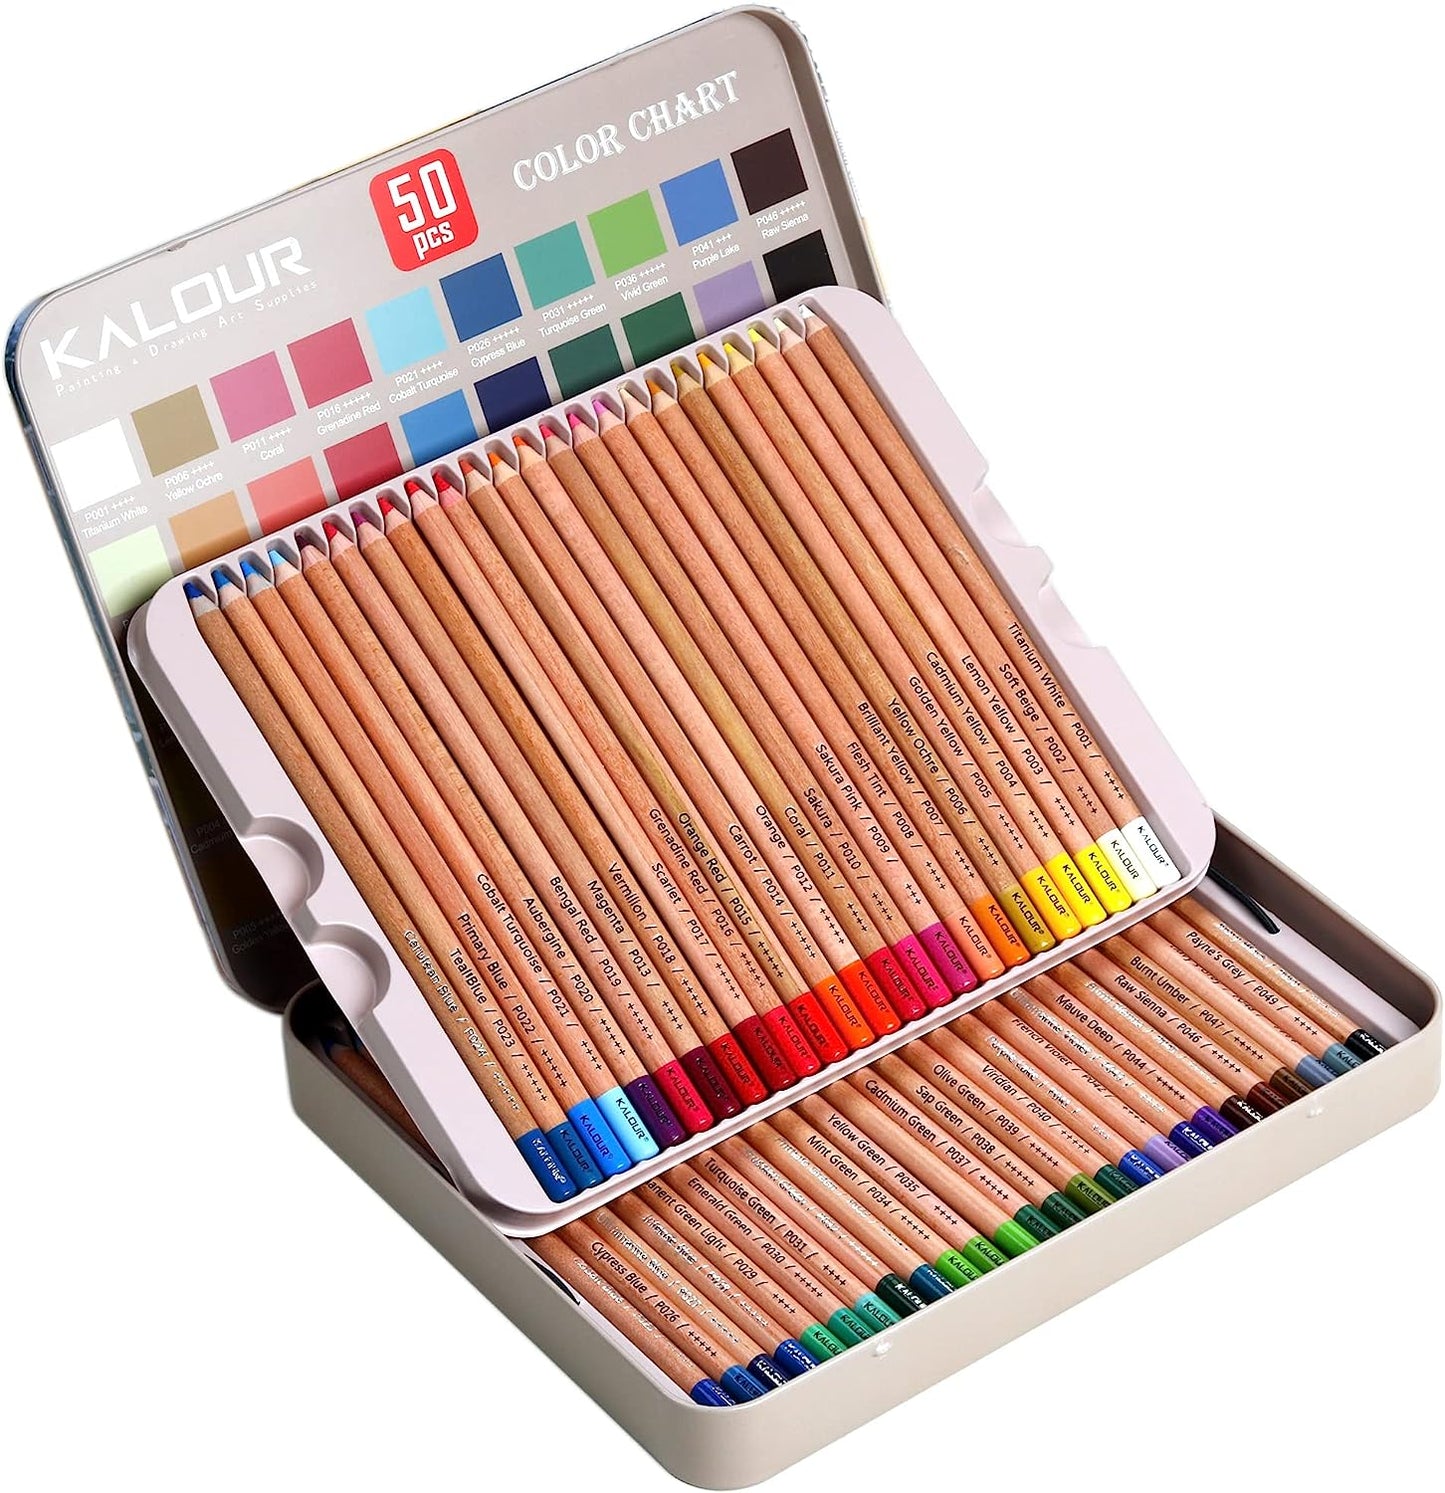 Bright Pastel Chalk Pencils - 6 Piece Set